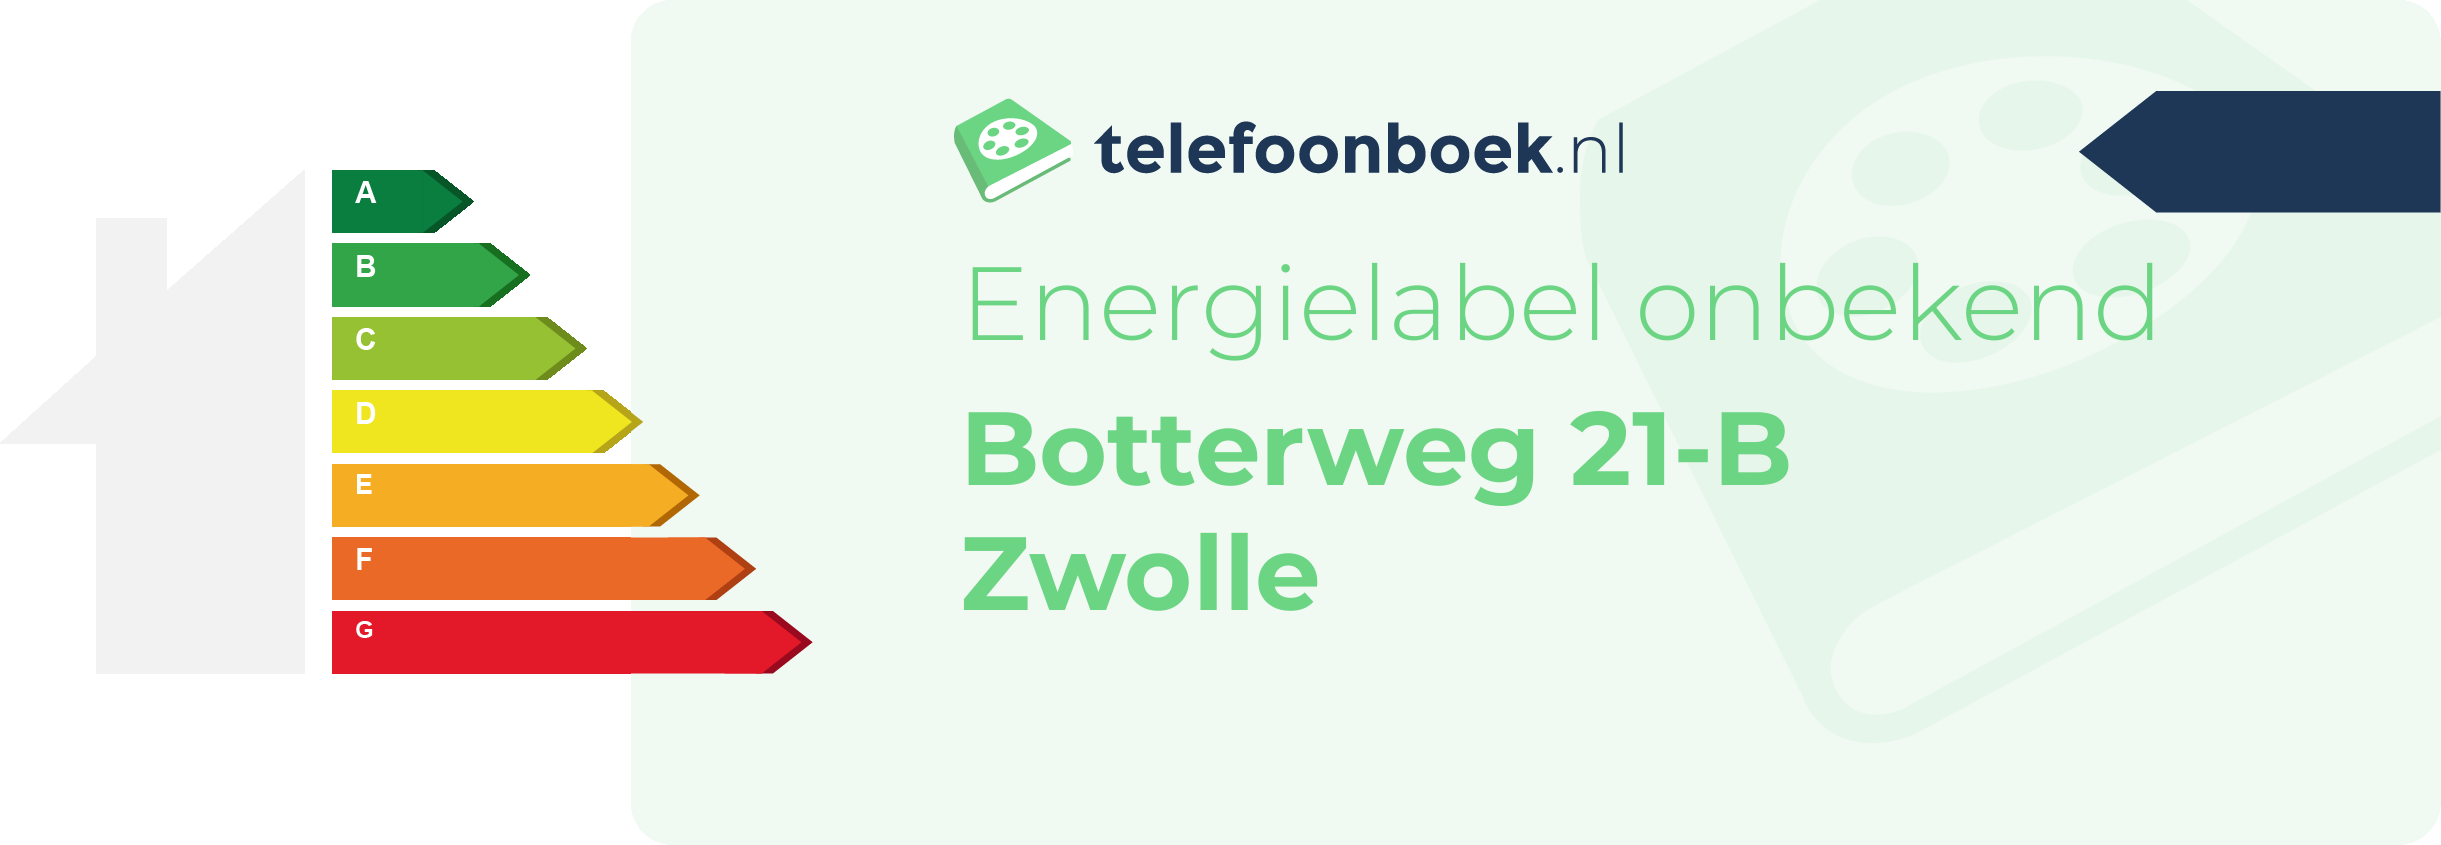 Energielabel Botterweg 21-B Zwolle